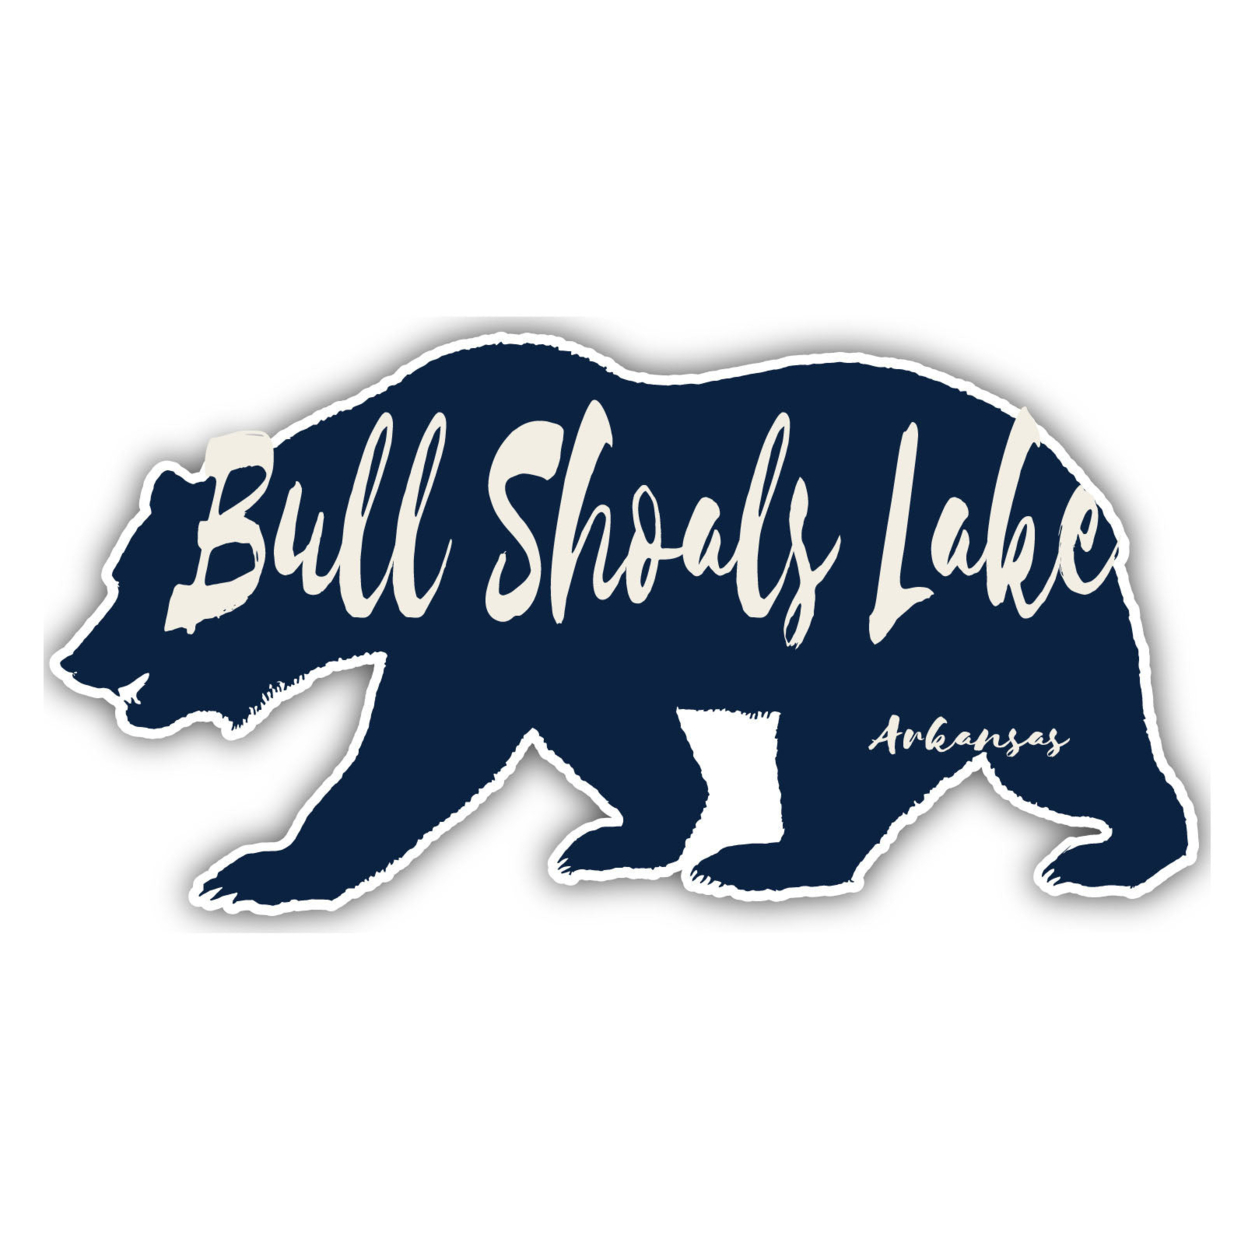 Bull Shoals Lake Arkansas Souvenir Decorative Stickers (Choose Theme And Size) - Single Unit, 2-Inch, Tent